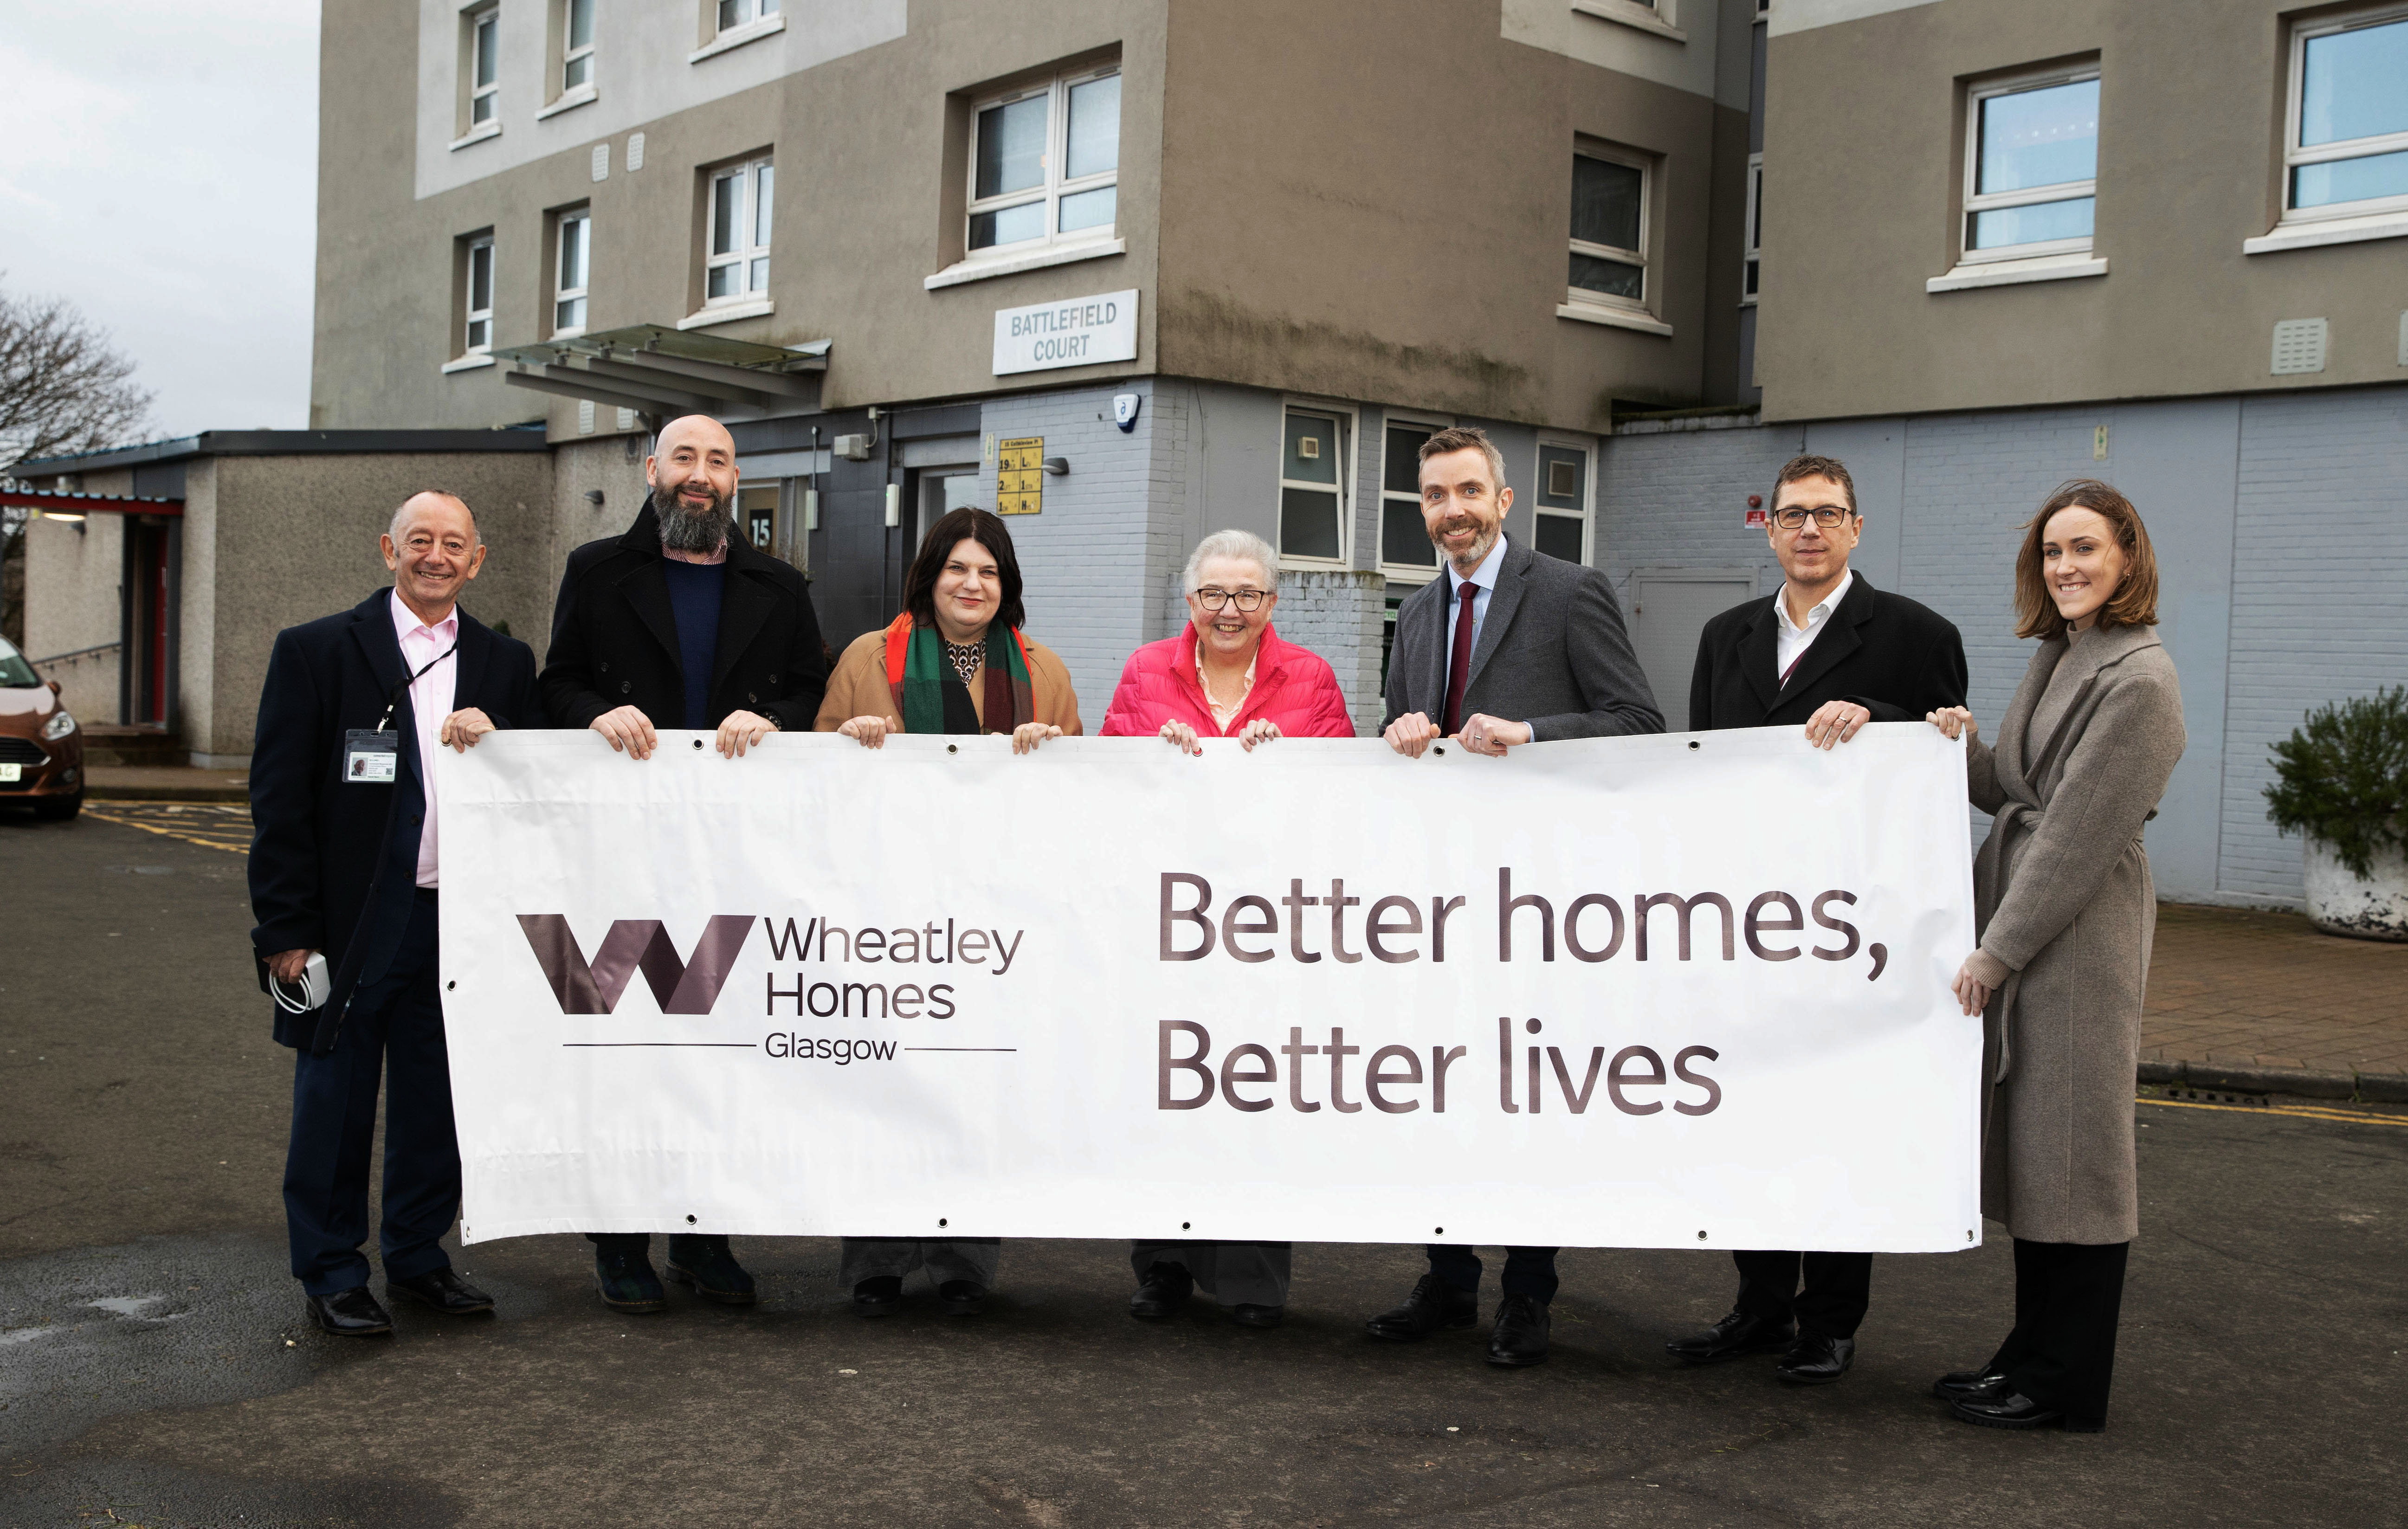 Council leader praises innovative heating system helping 7,000 Wheatley tenants